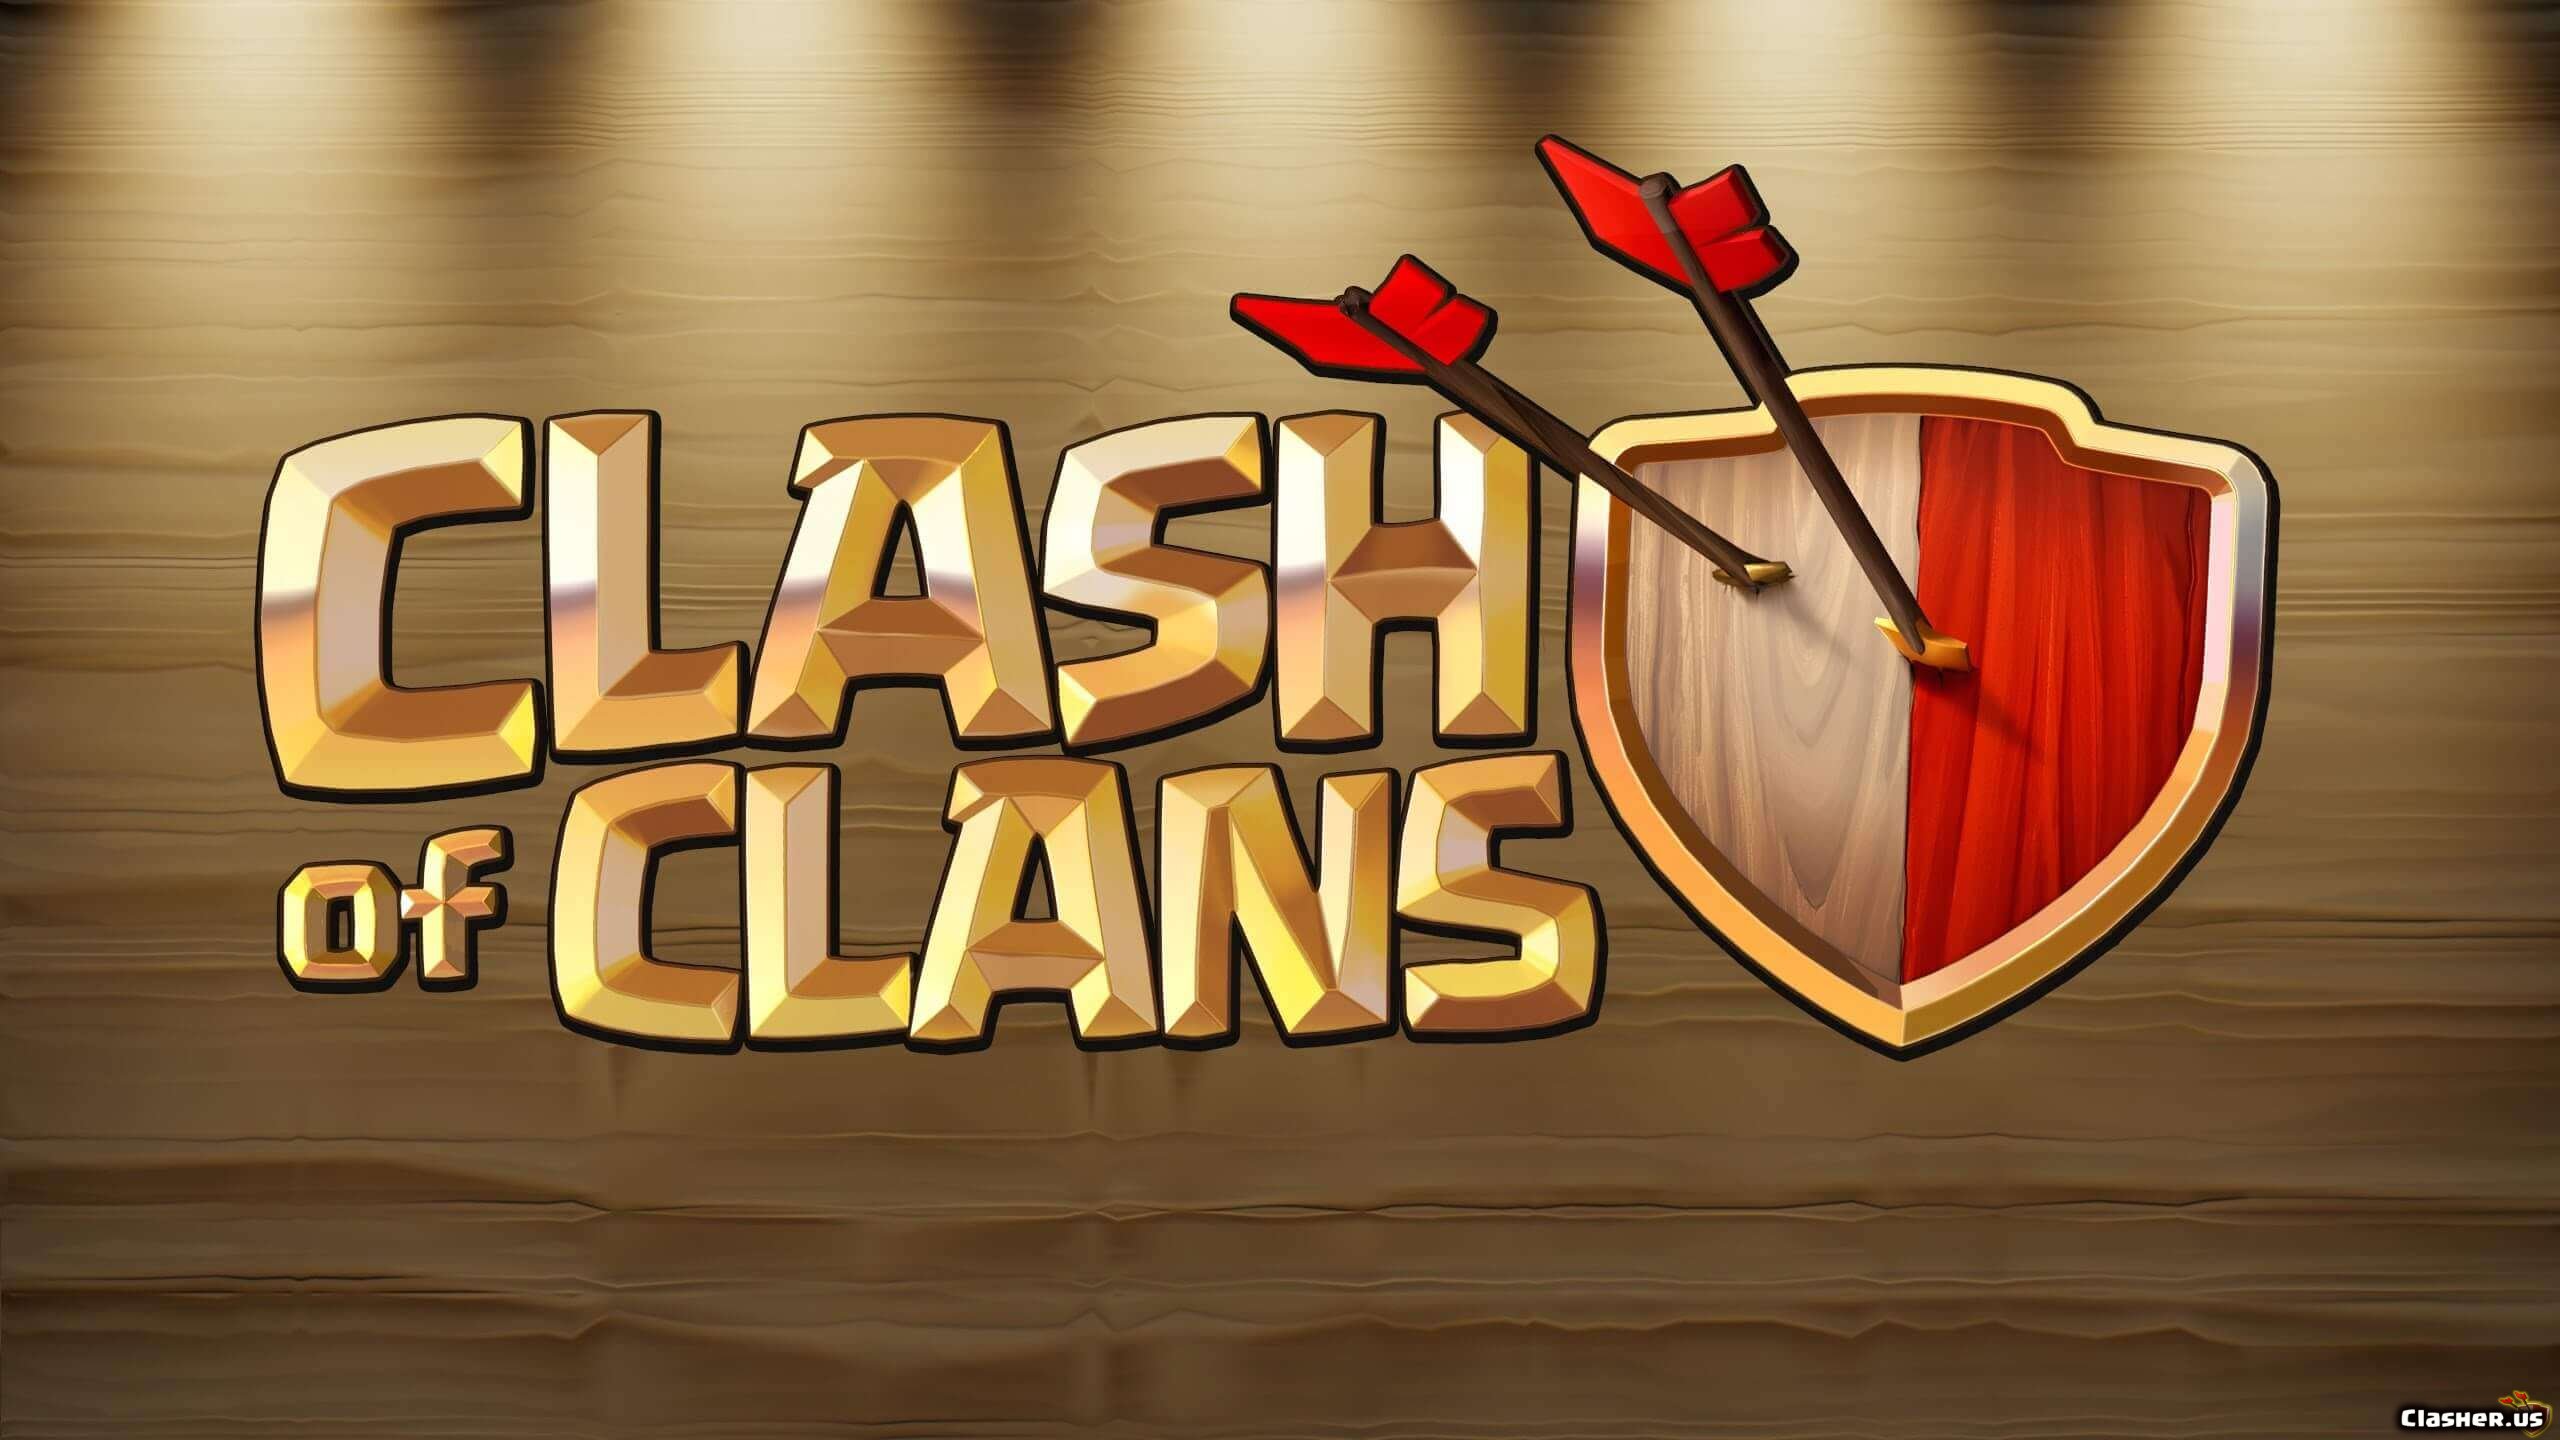 Game of clans. Клеш оф кланс. Clash of Clans логотип. Clash of Clans заставка. Clash of Clans надпись.